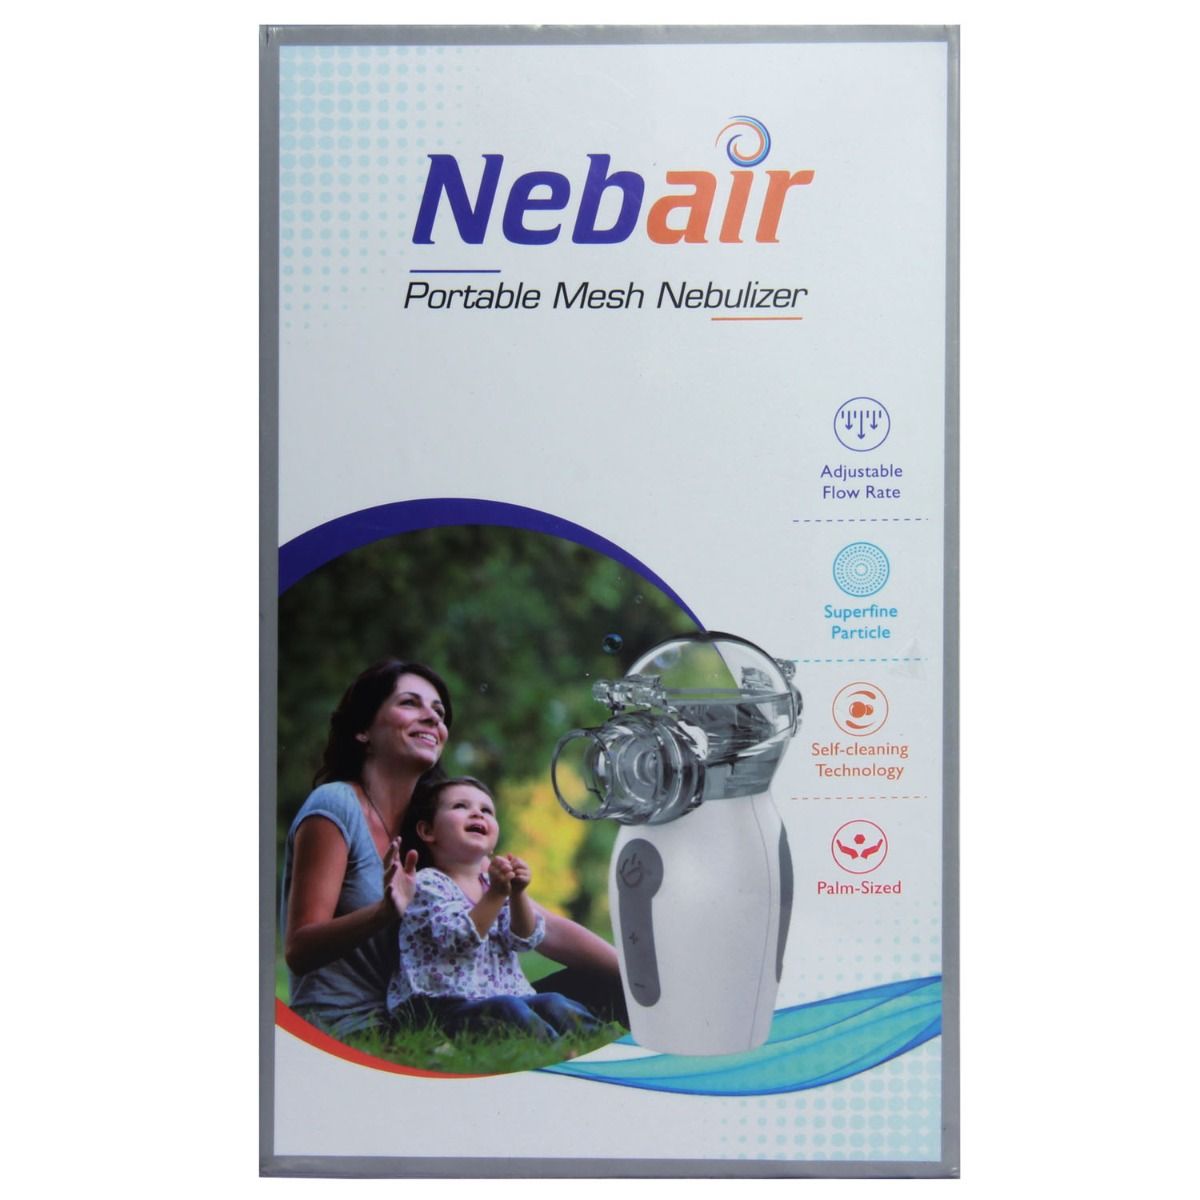 Buy Nebair Portable Mesh Nebulizer (Zydus) Online